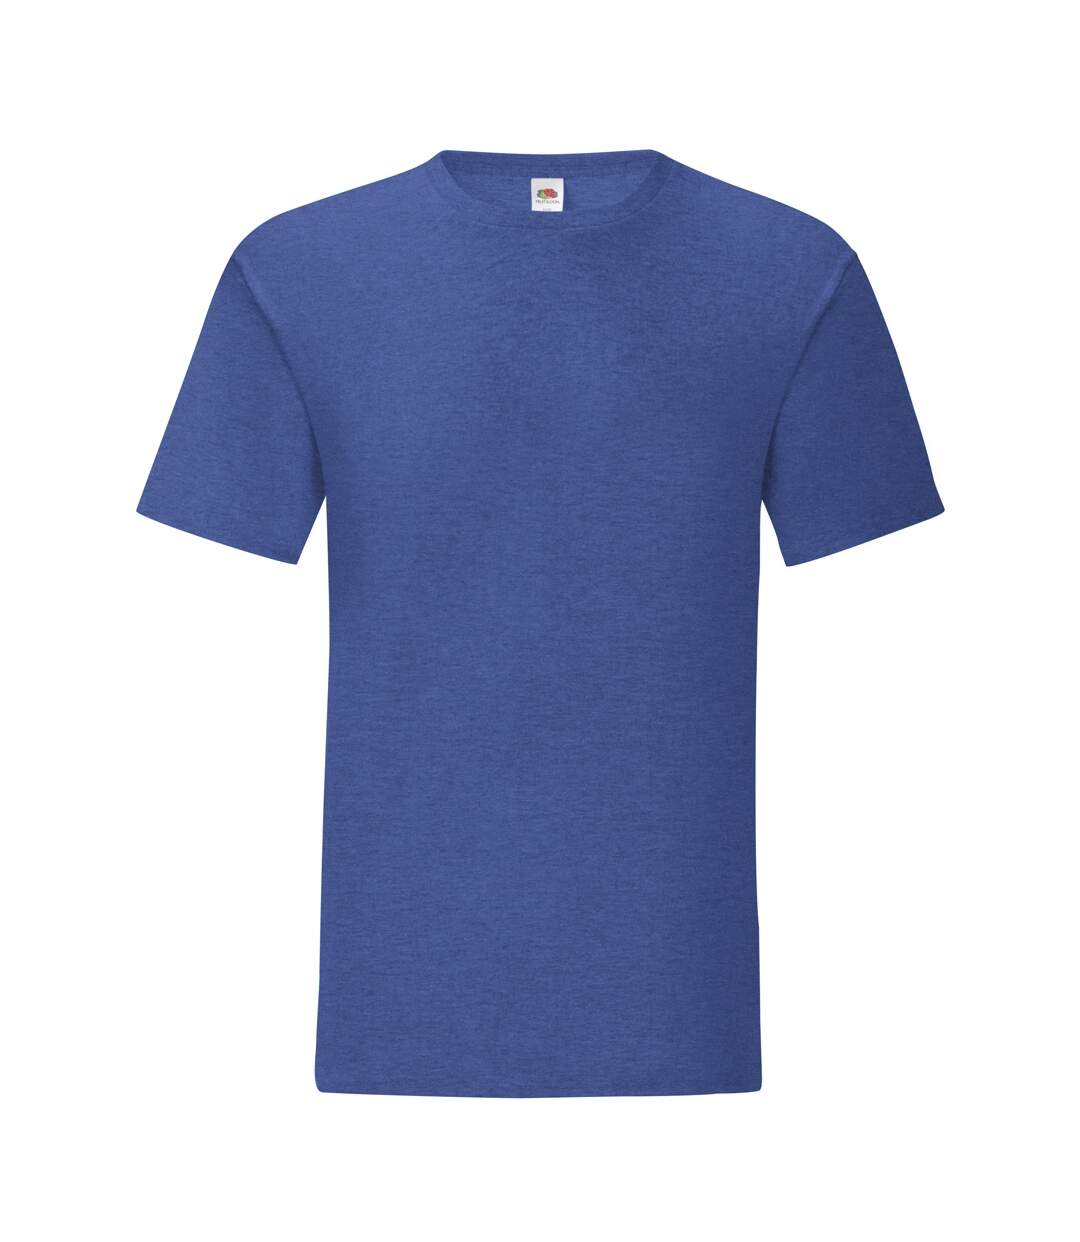 Fruit Of The Loom - T-shirt ICONIC - Hommes (Bleu roi chiné) - UTPC4369